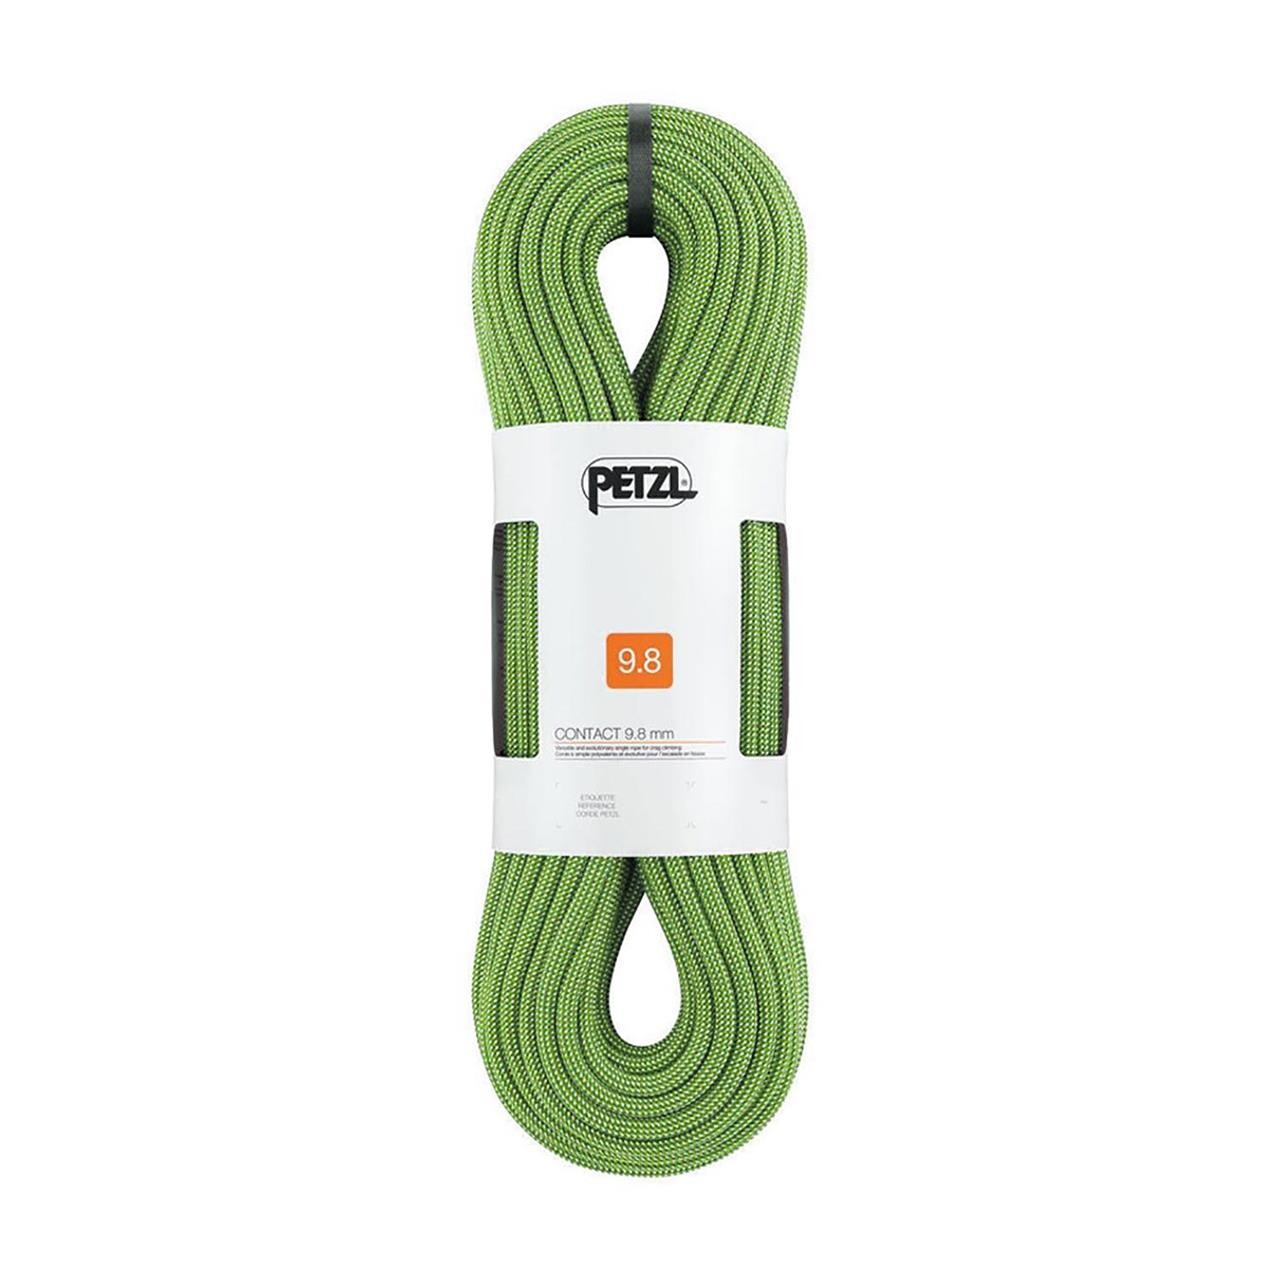 Billede af Petzl Contact Wall Dynamic Rope 9.8 mm (Grøn (GREEN) 40 M)